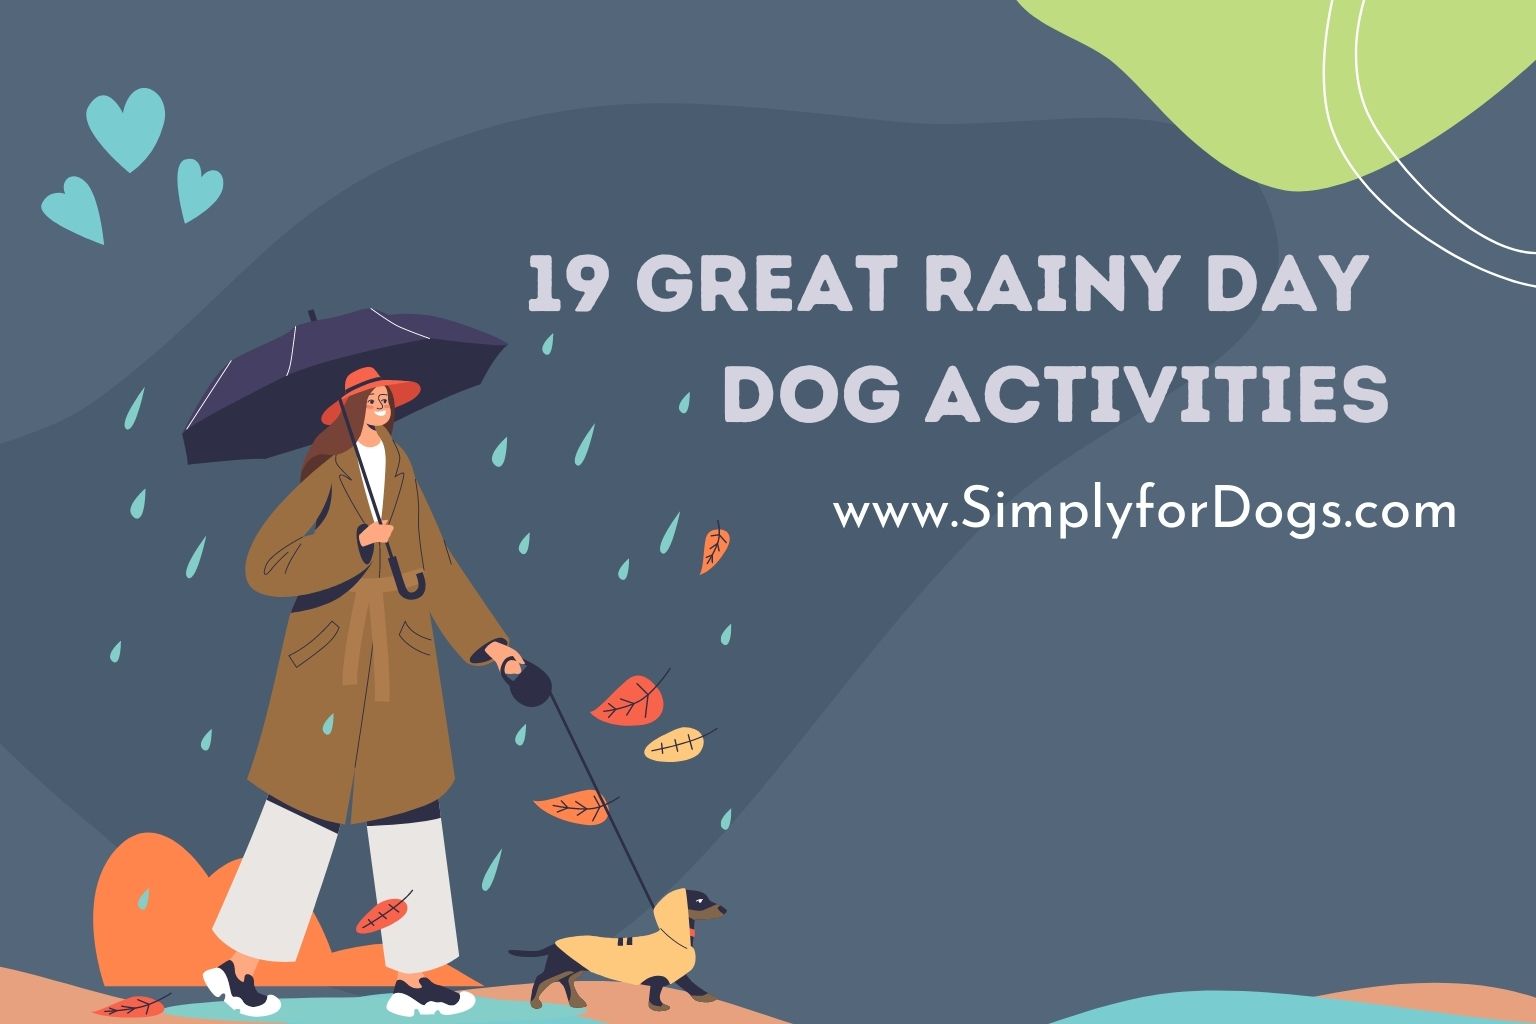 19 Great Rainy Day Dog Activities